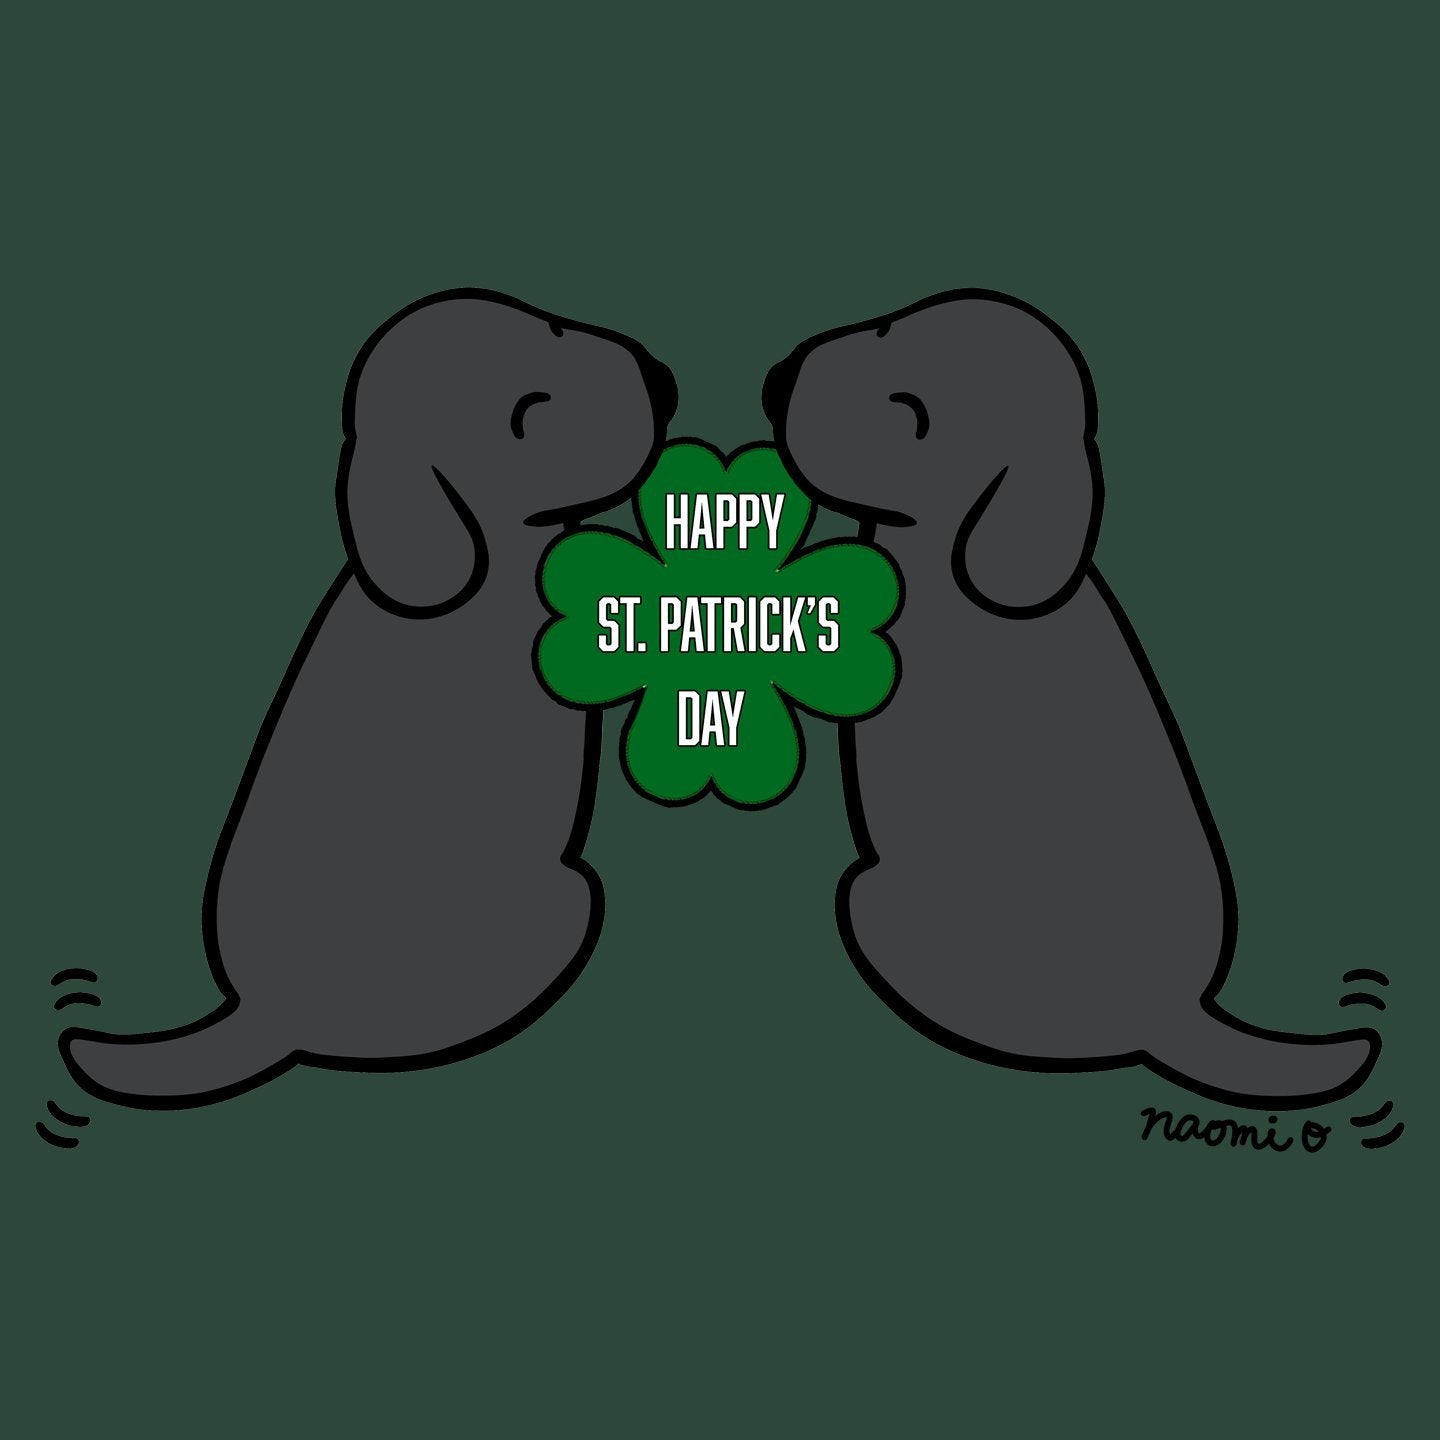 Happy St. Patrick's Day Black Lab Puppies - Adult Unisex T-Shirt